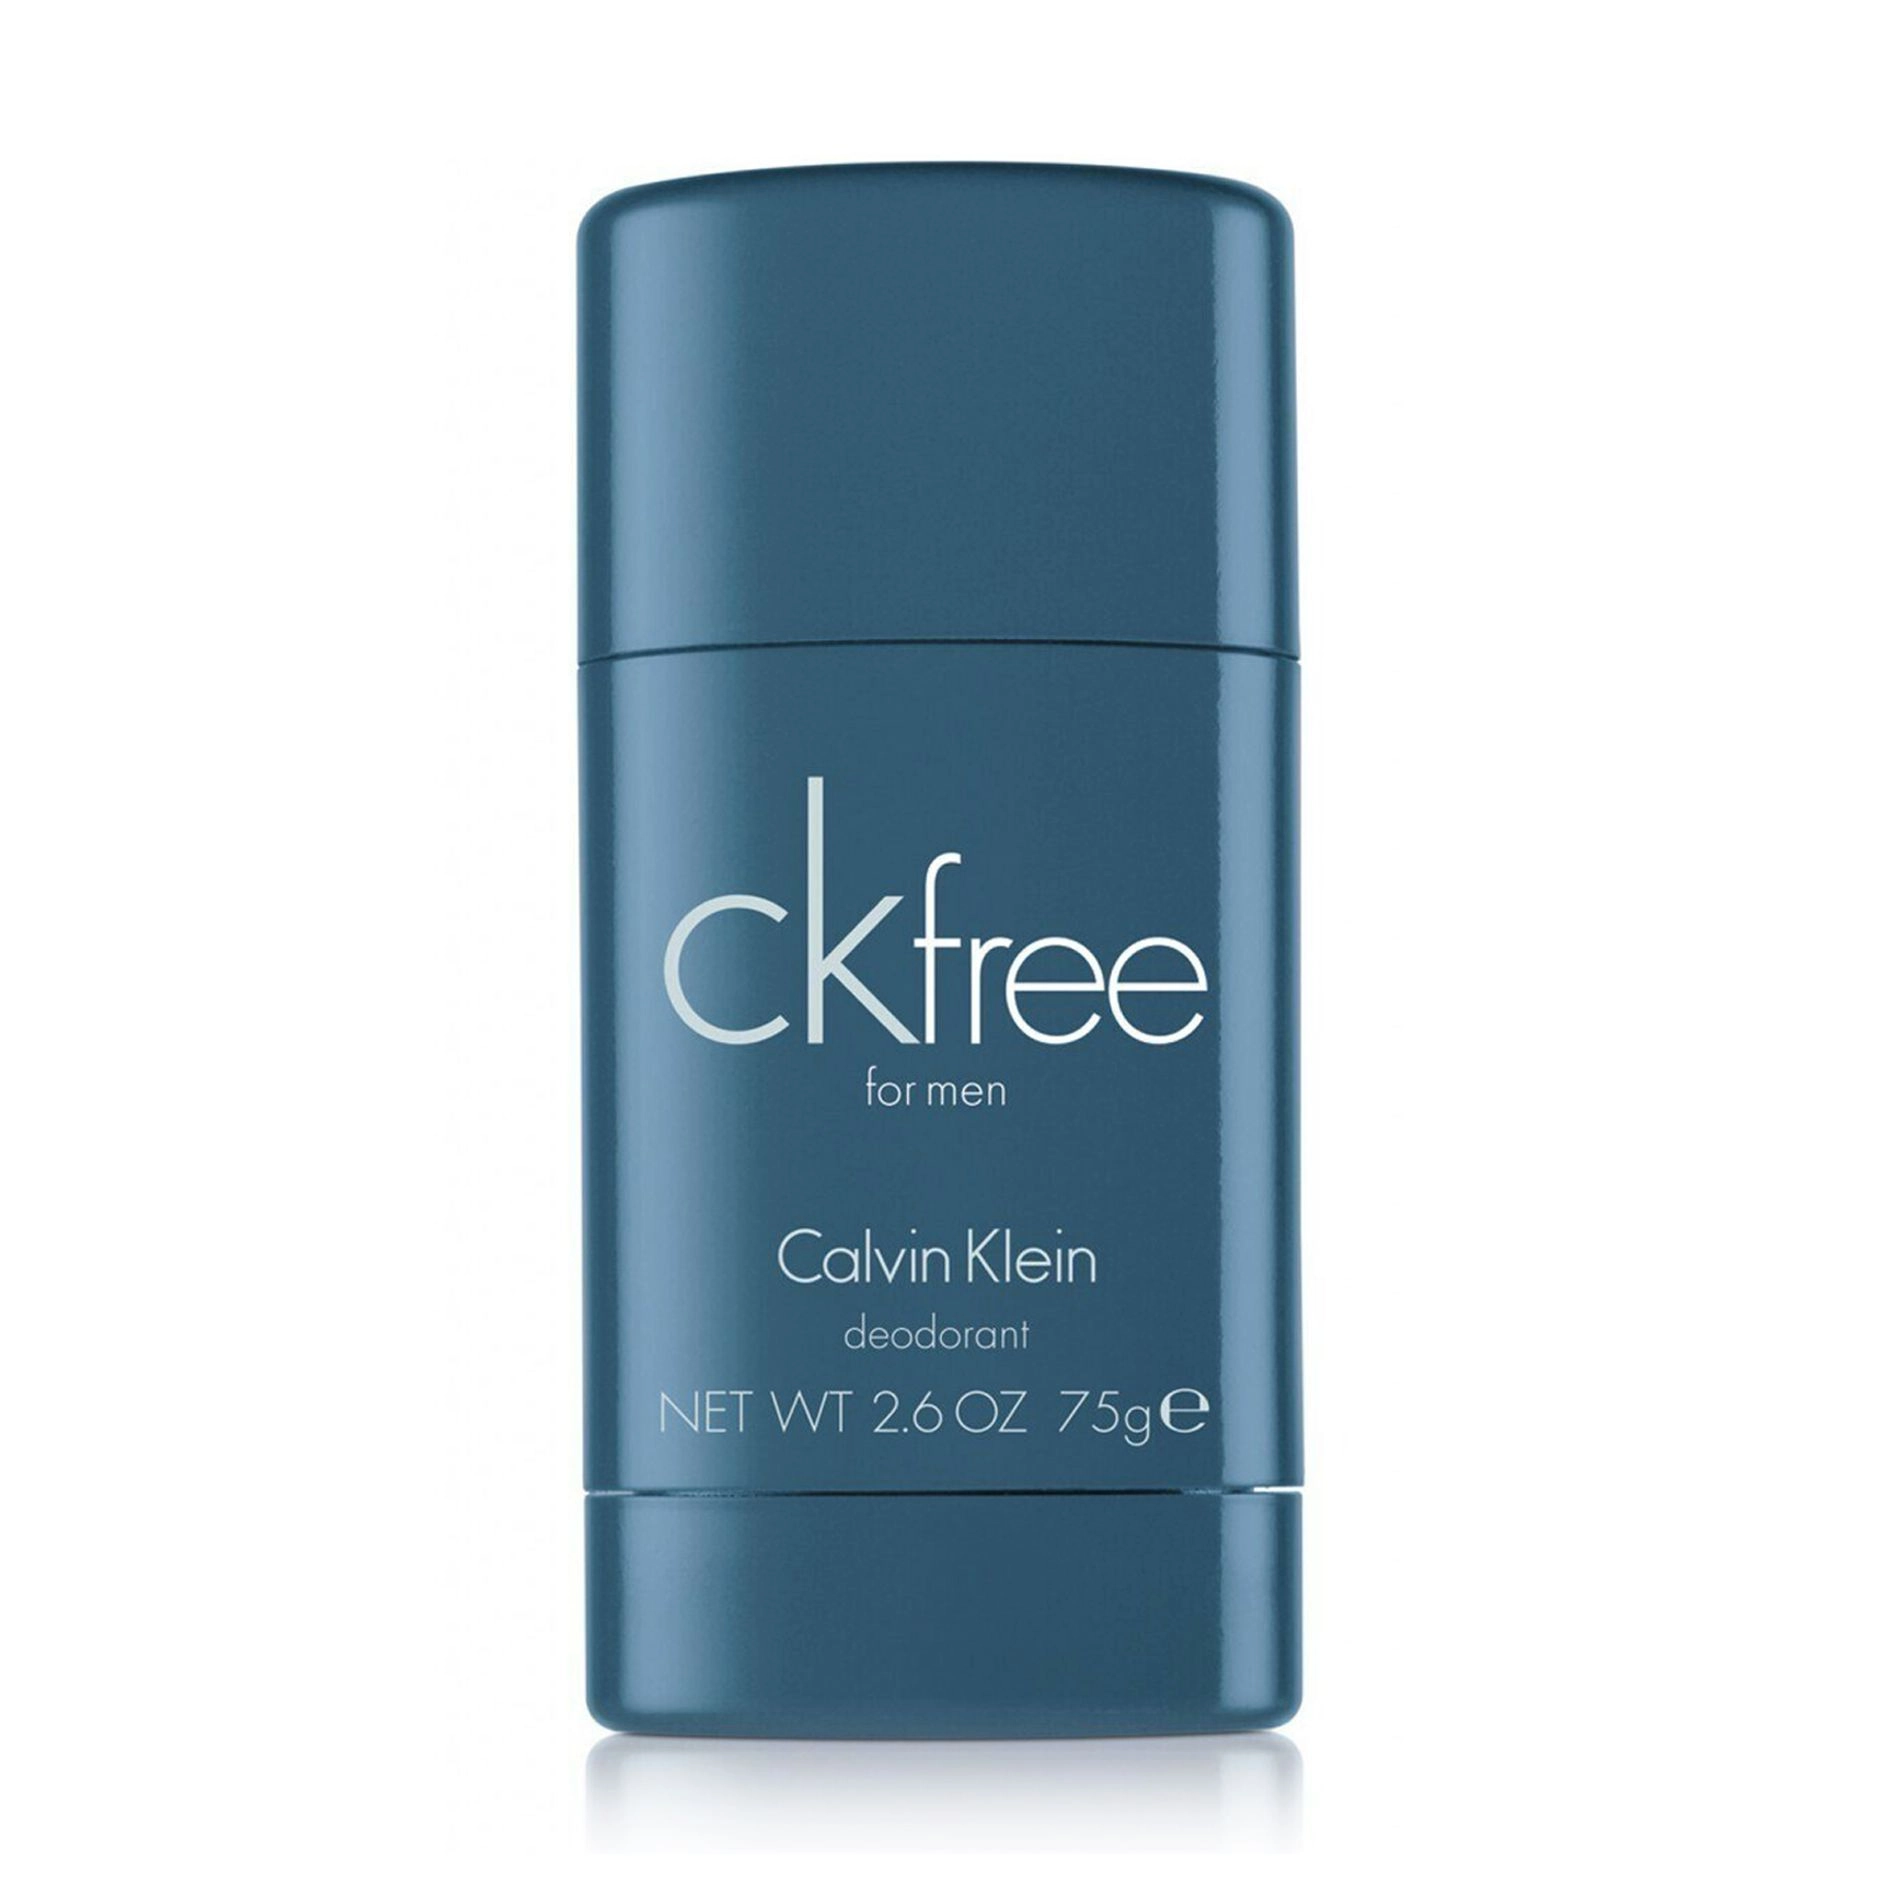 Calvin Klein Парфюмированный дезодорант-стик CK Free мужской, 75 г - фото N1